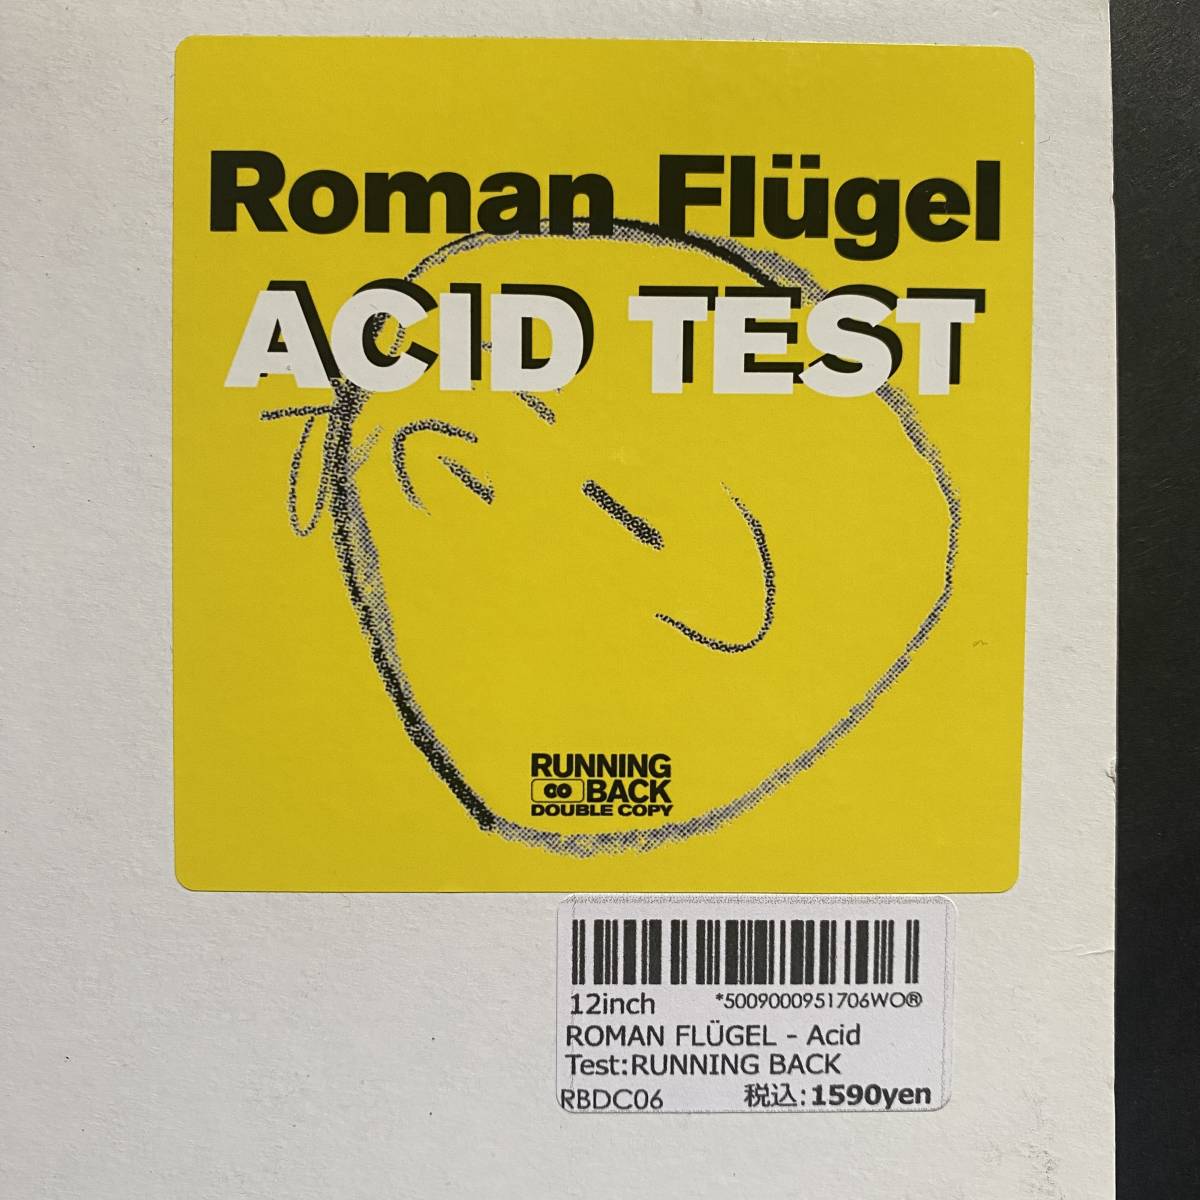 [Acid, Techno] Roman Flugel - Acid Test / Running Back Double Copy - RBDC06 / '20の画像2